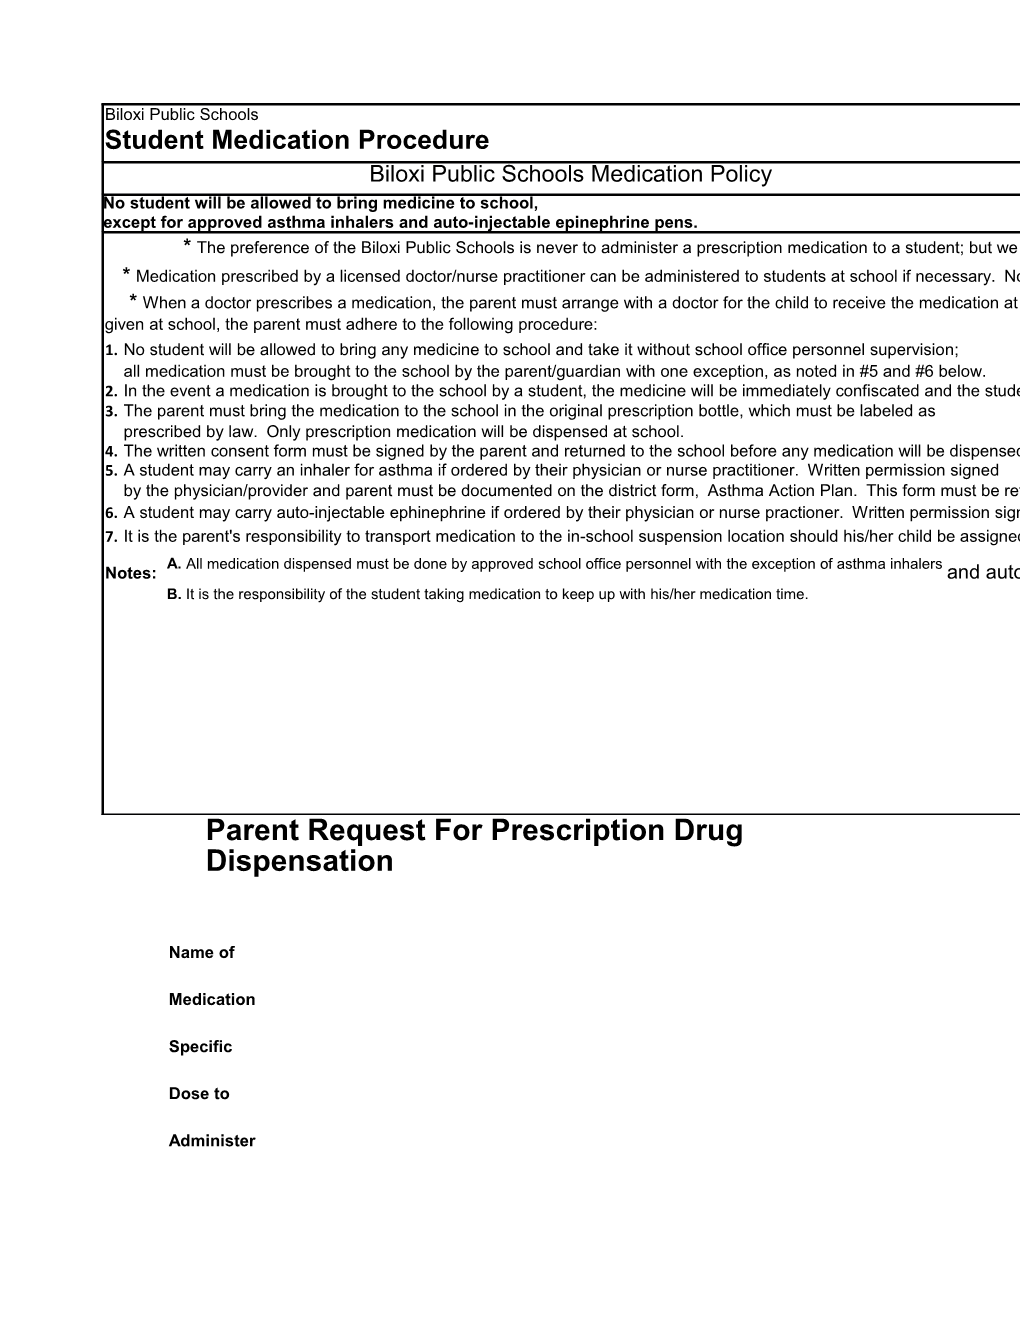 Medication Dispensenation Form.Xls